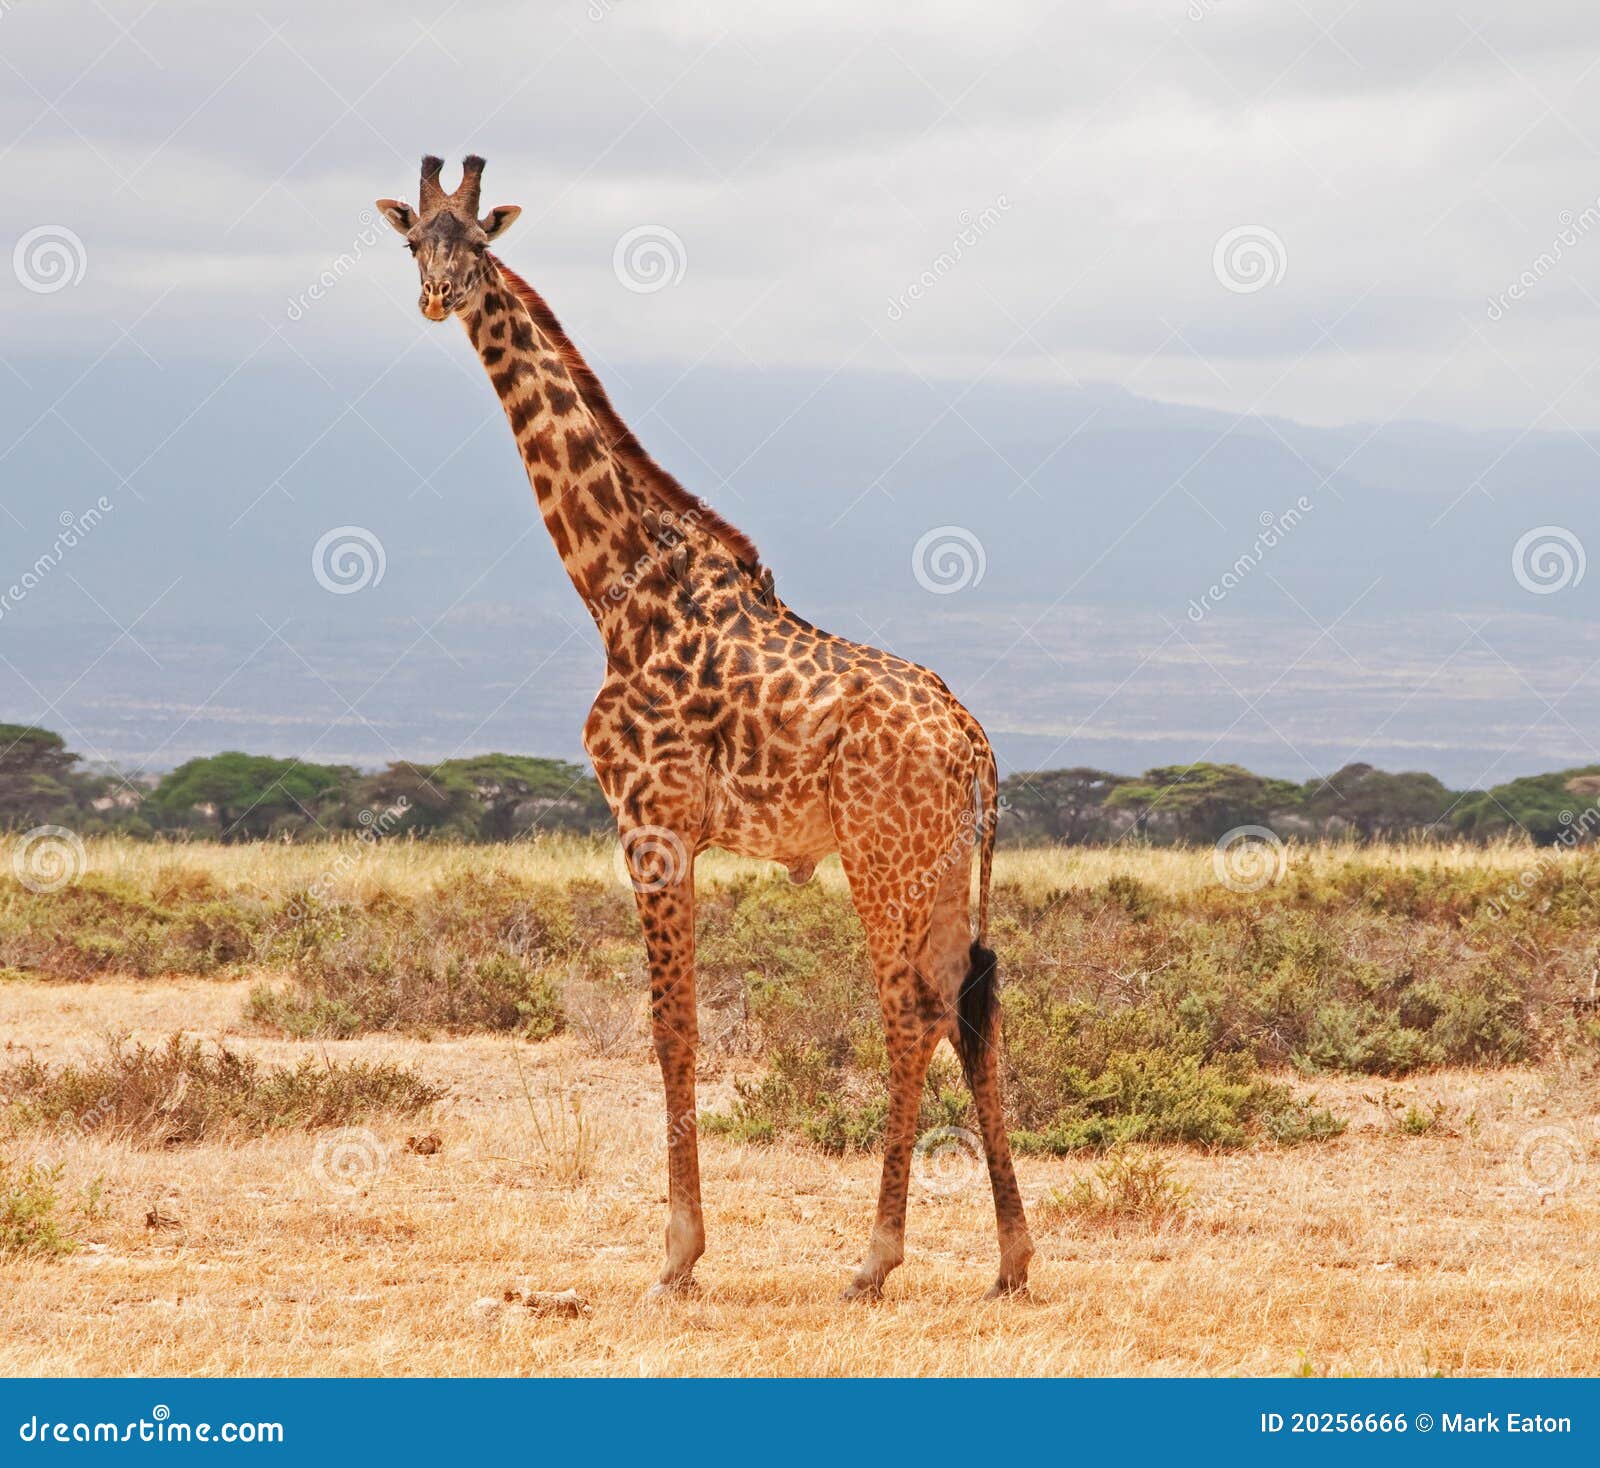 giraffe at amboseli national park, kenya